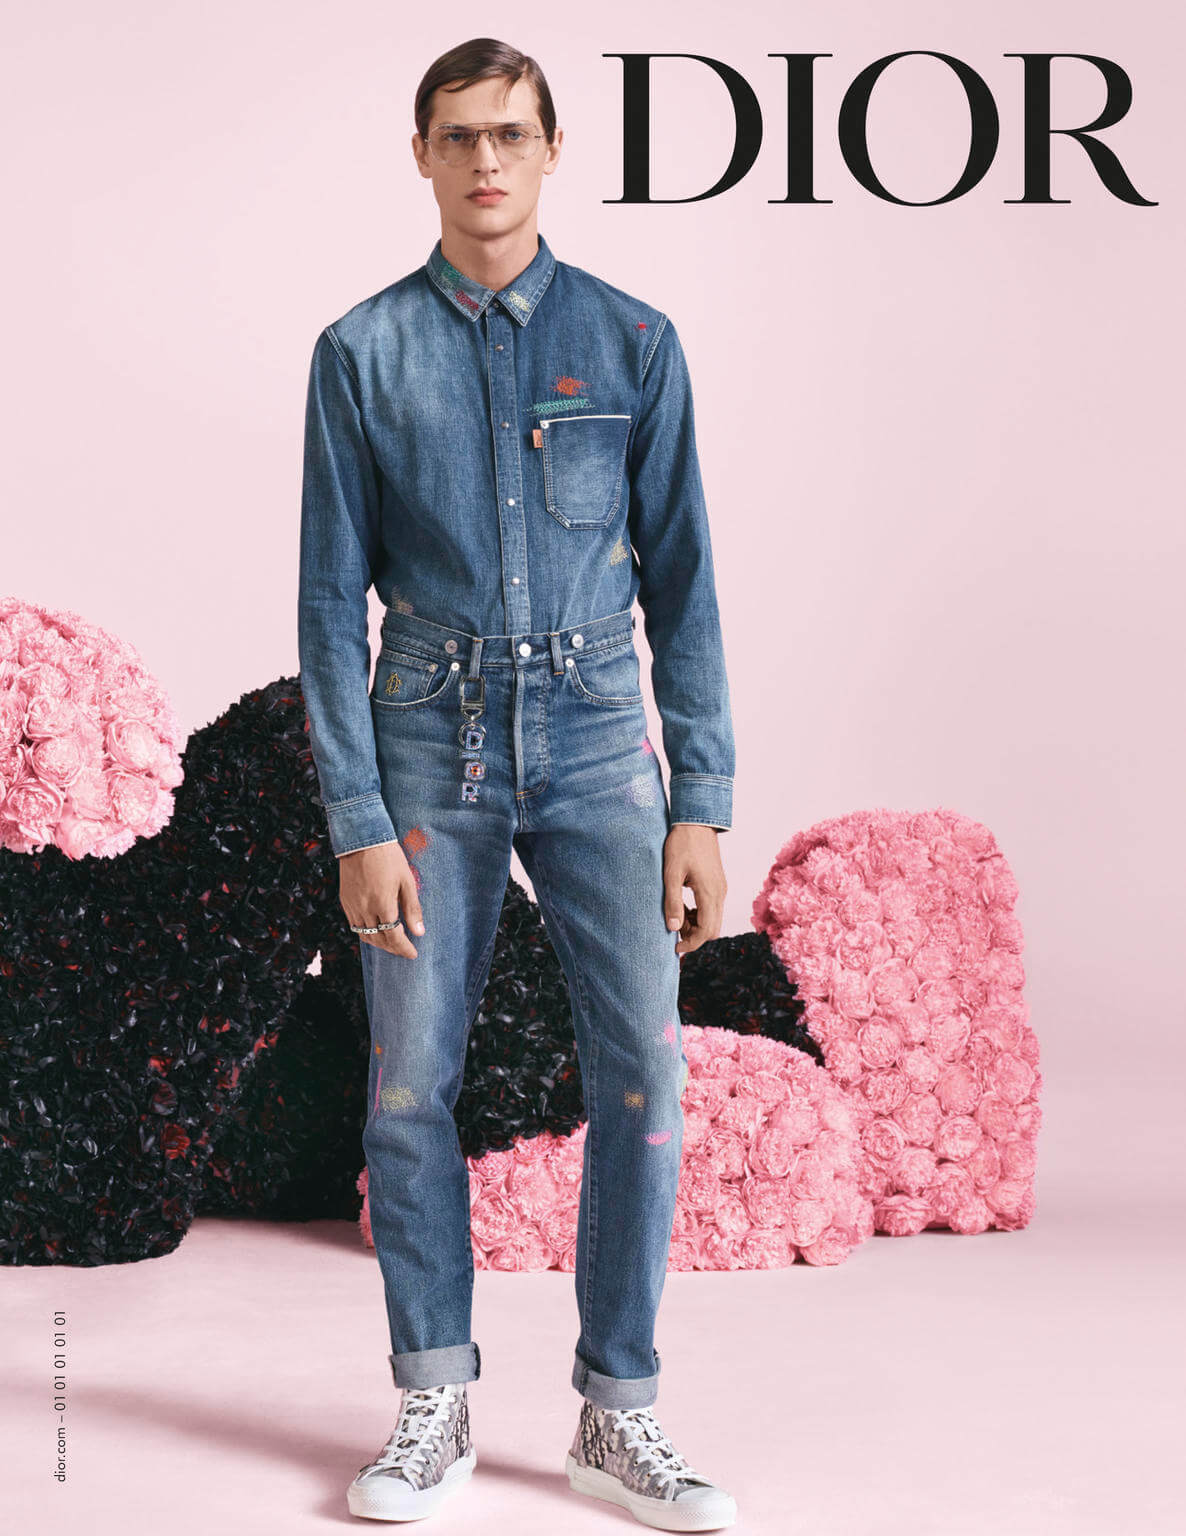 dior jeans 2019